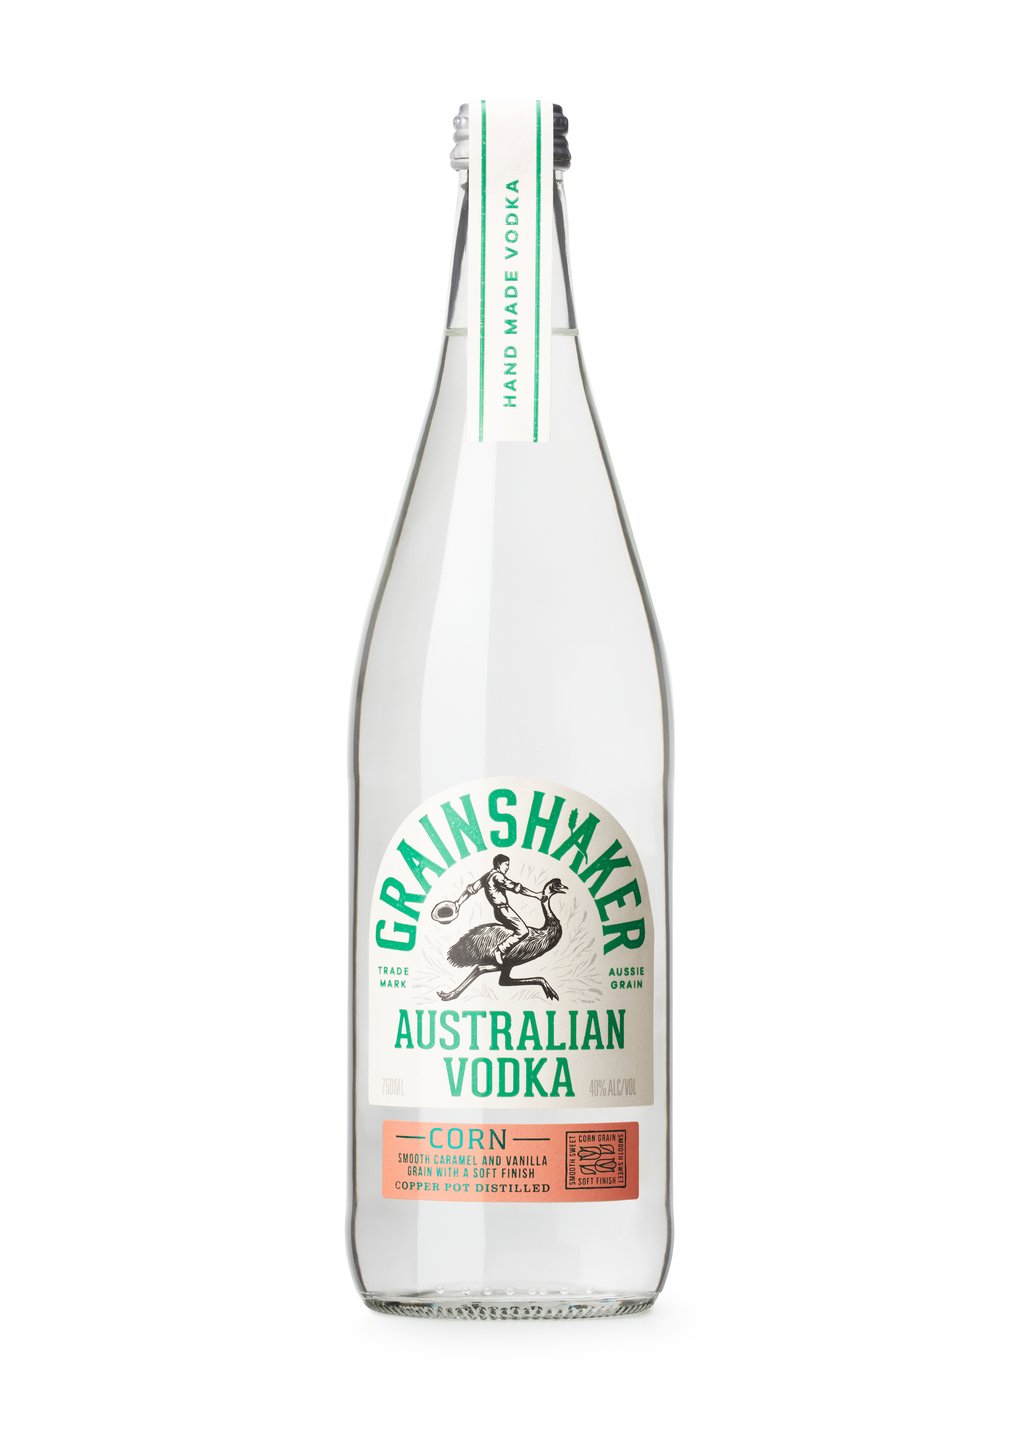 Buy Grainshaker Australia Vodka Corn 750ml Online Lowest Price Guarantee Best Deals Same 3210